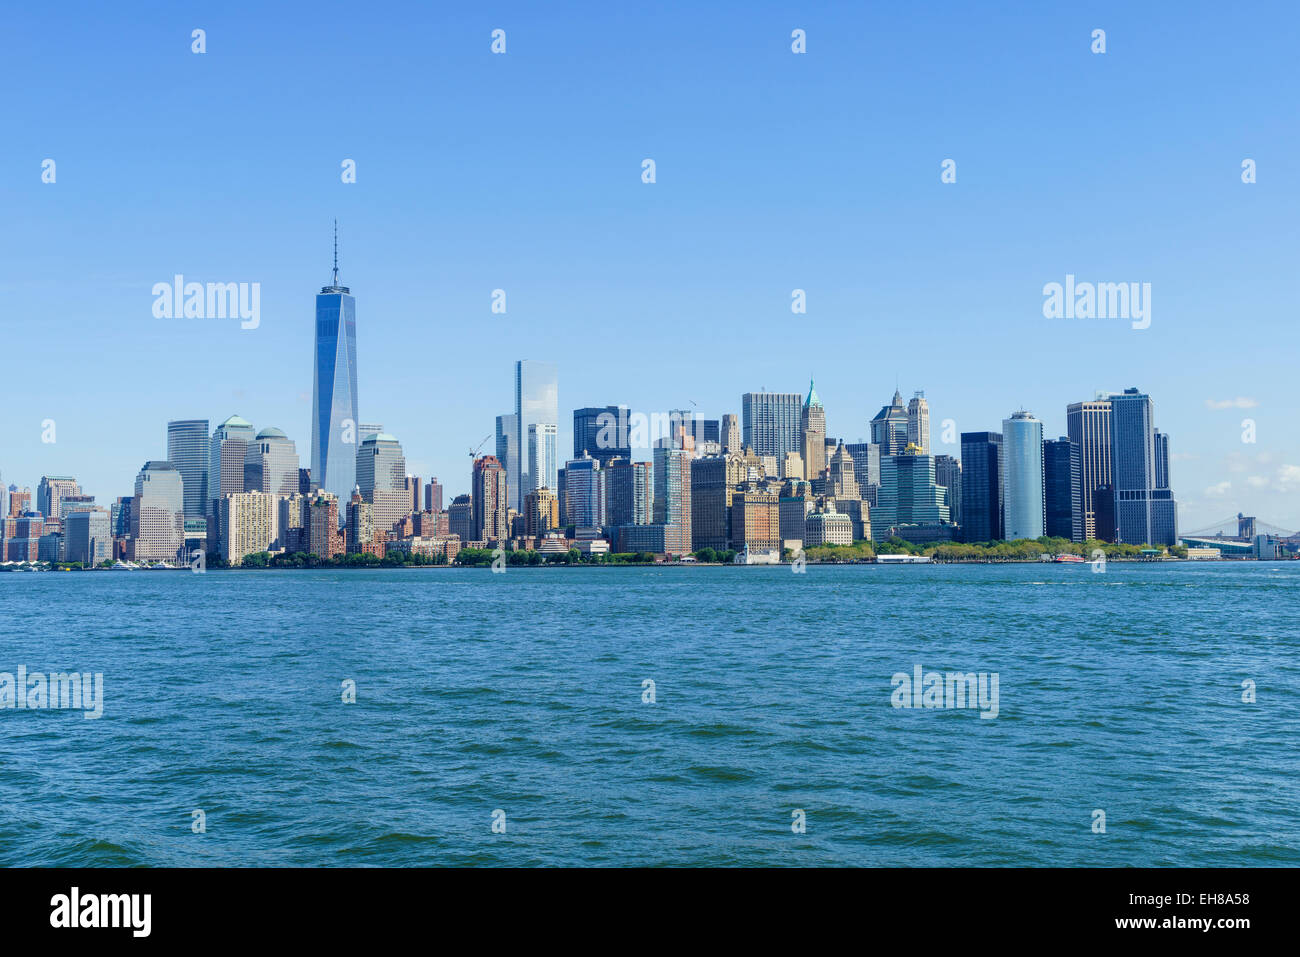 Lower Manhattan skyline with One World Trade Center viewed from Hudson River, New York City, New York, USA Stock Photo